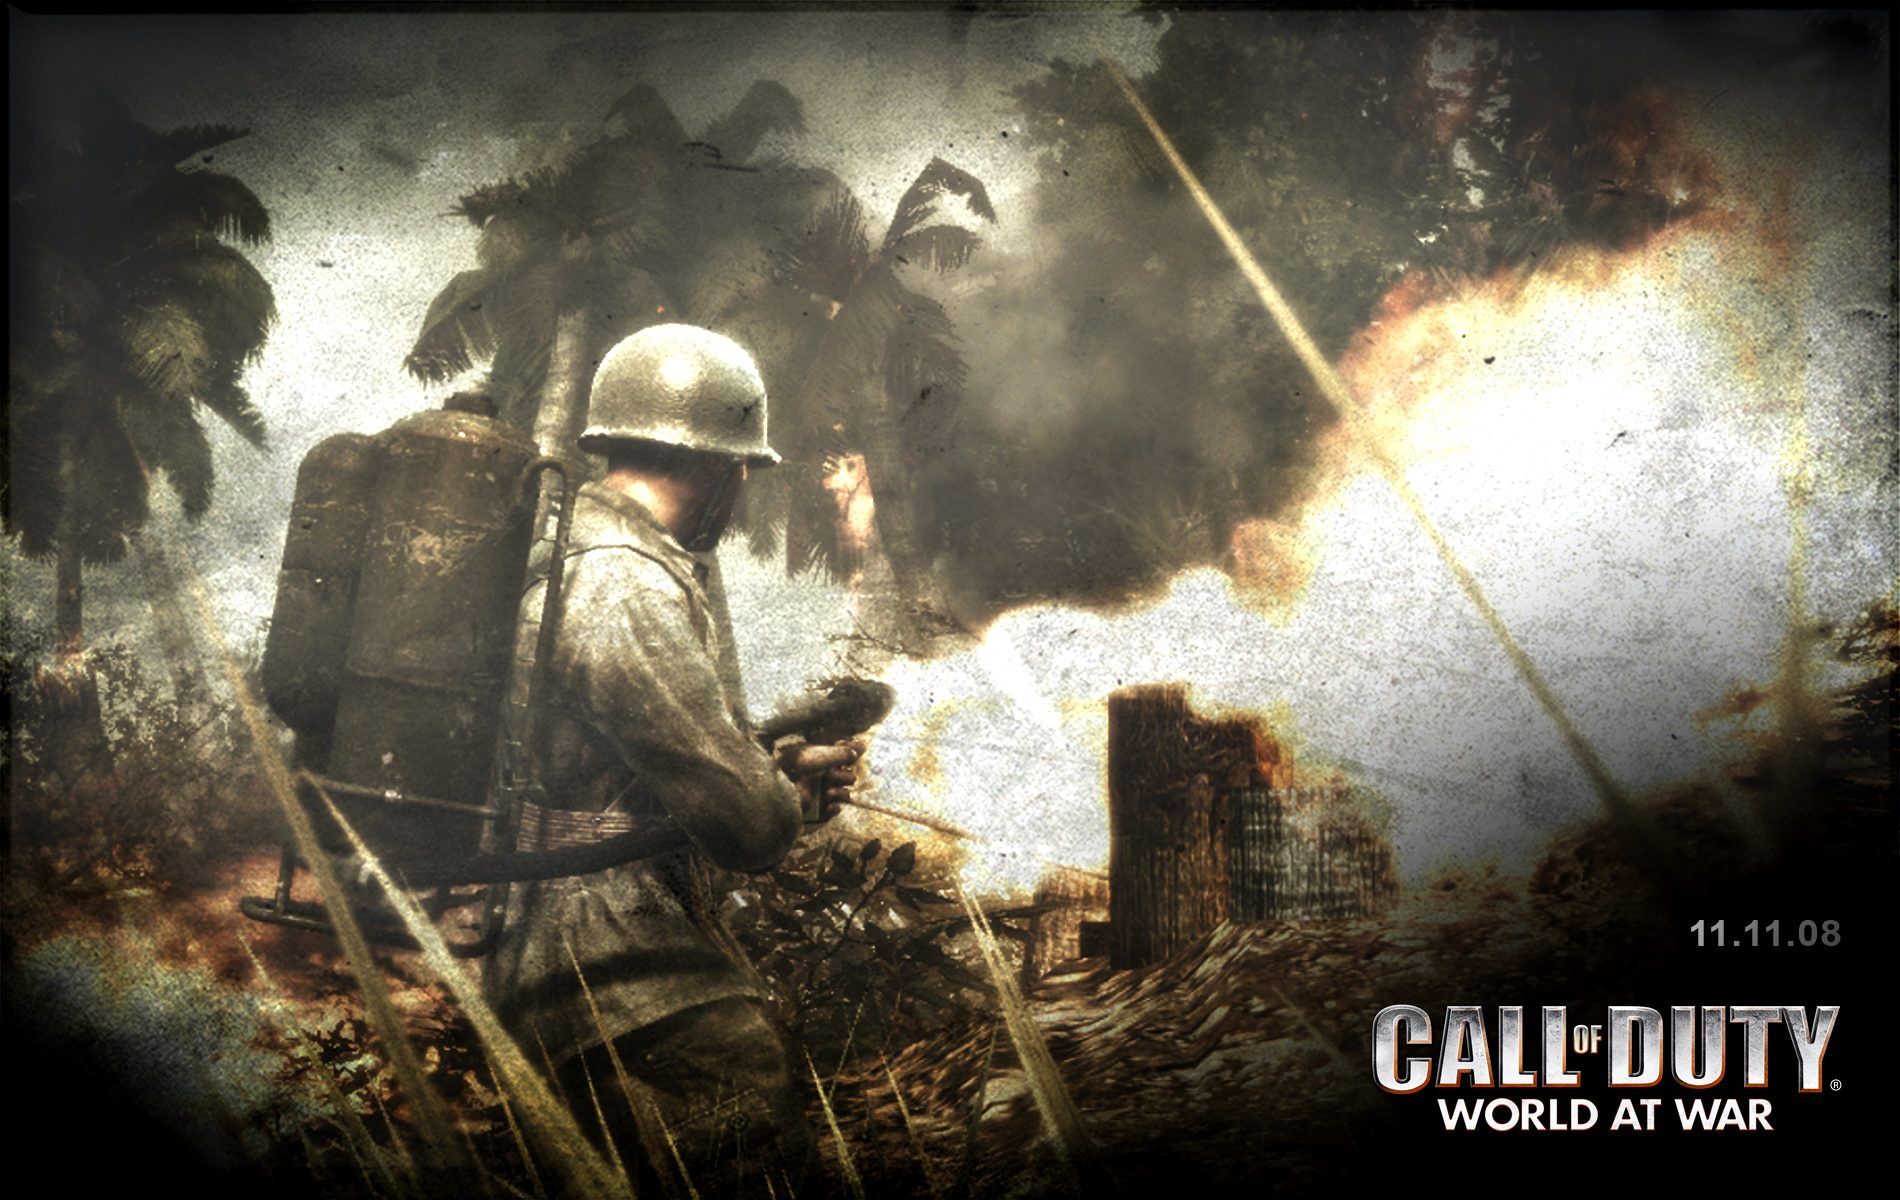 Call of Duty - World At War Wallpaper | 1900x1200 | ID:3385